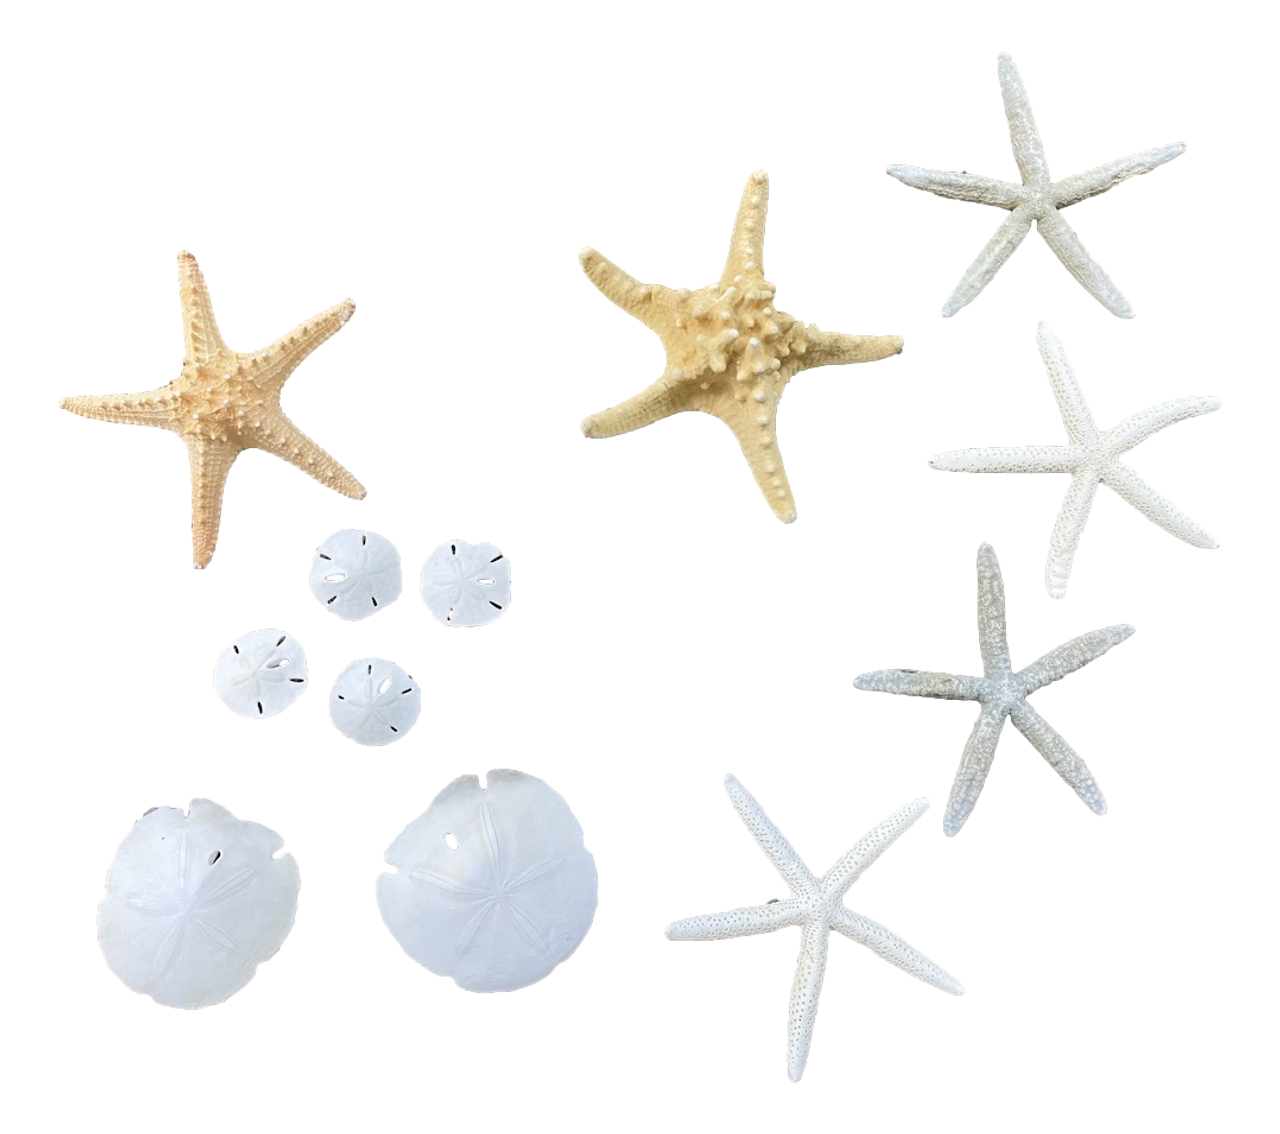 Tumbler Home Set of 6 White Starfish and Sand Dollars - 3 Finger Starfish  (4-6 in.) and 3 Sand Dollars (3-3.5 in.) - Starfish and Sand Dollars  for